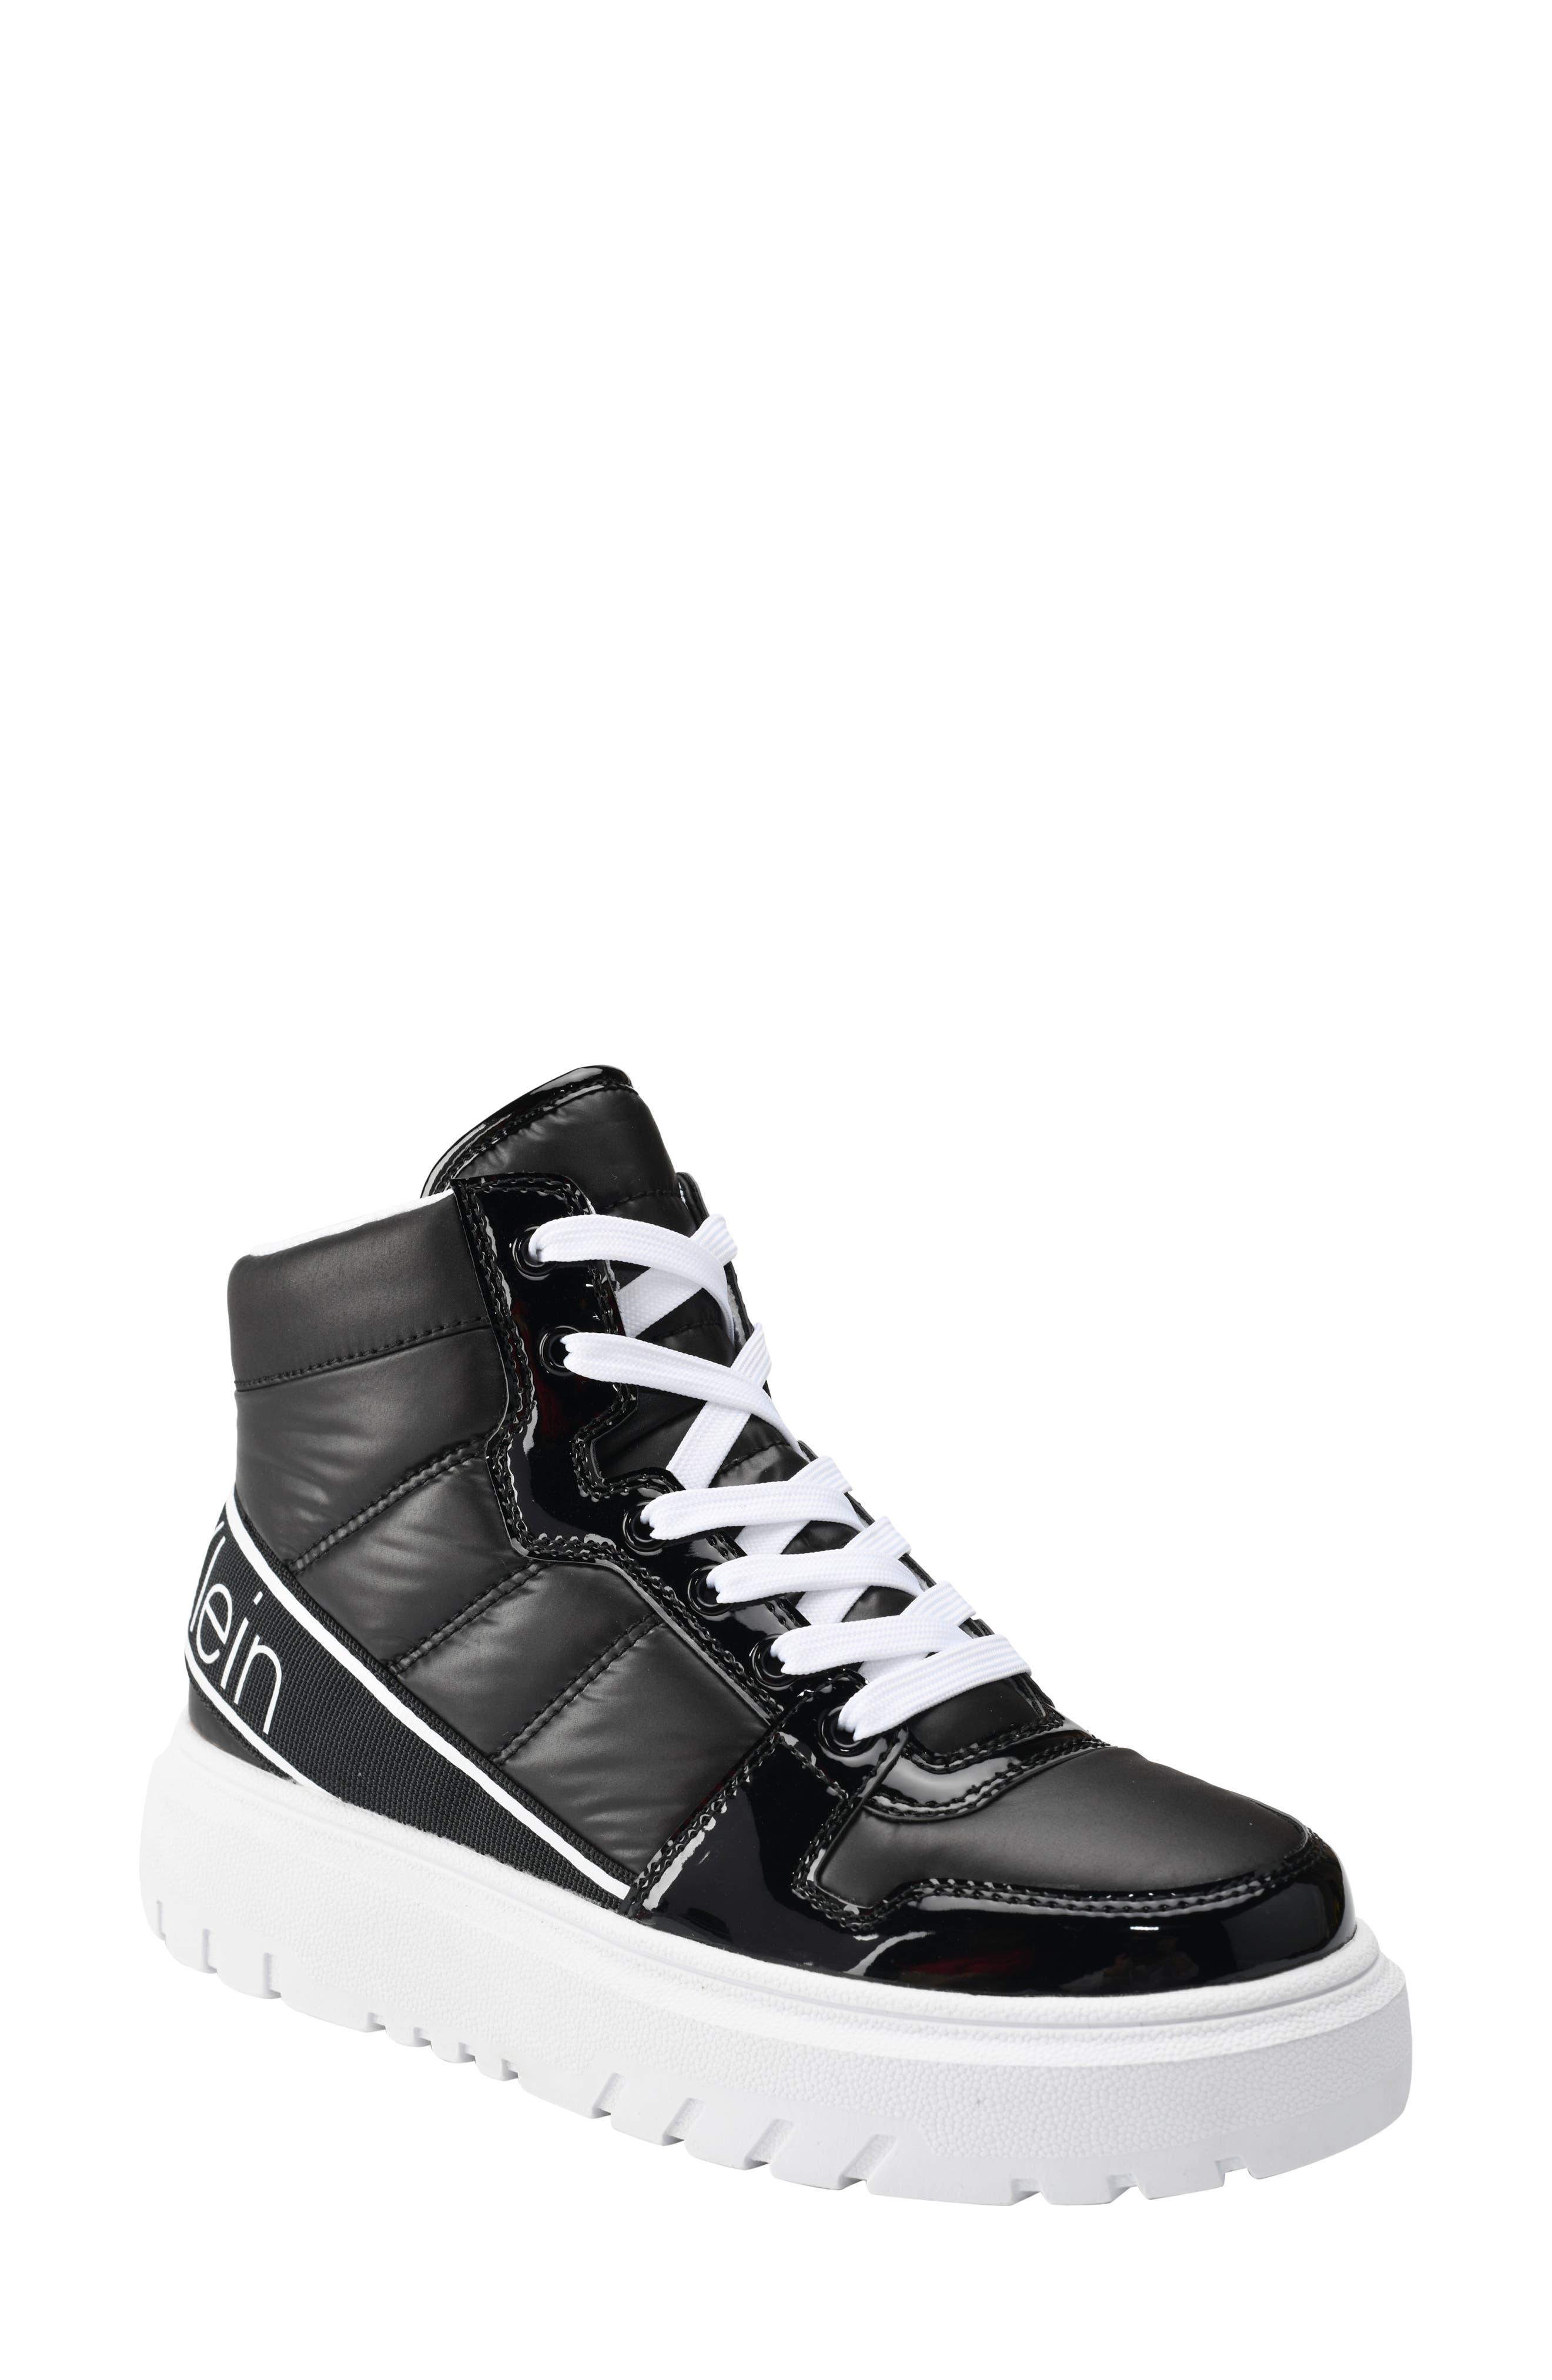 Calvin Klein Denisse High Top Sneaker in Black | Lyst